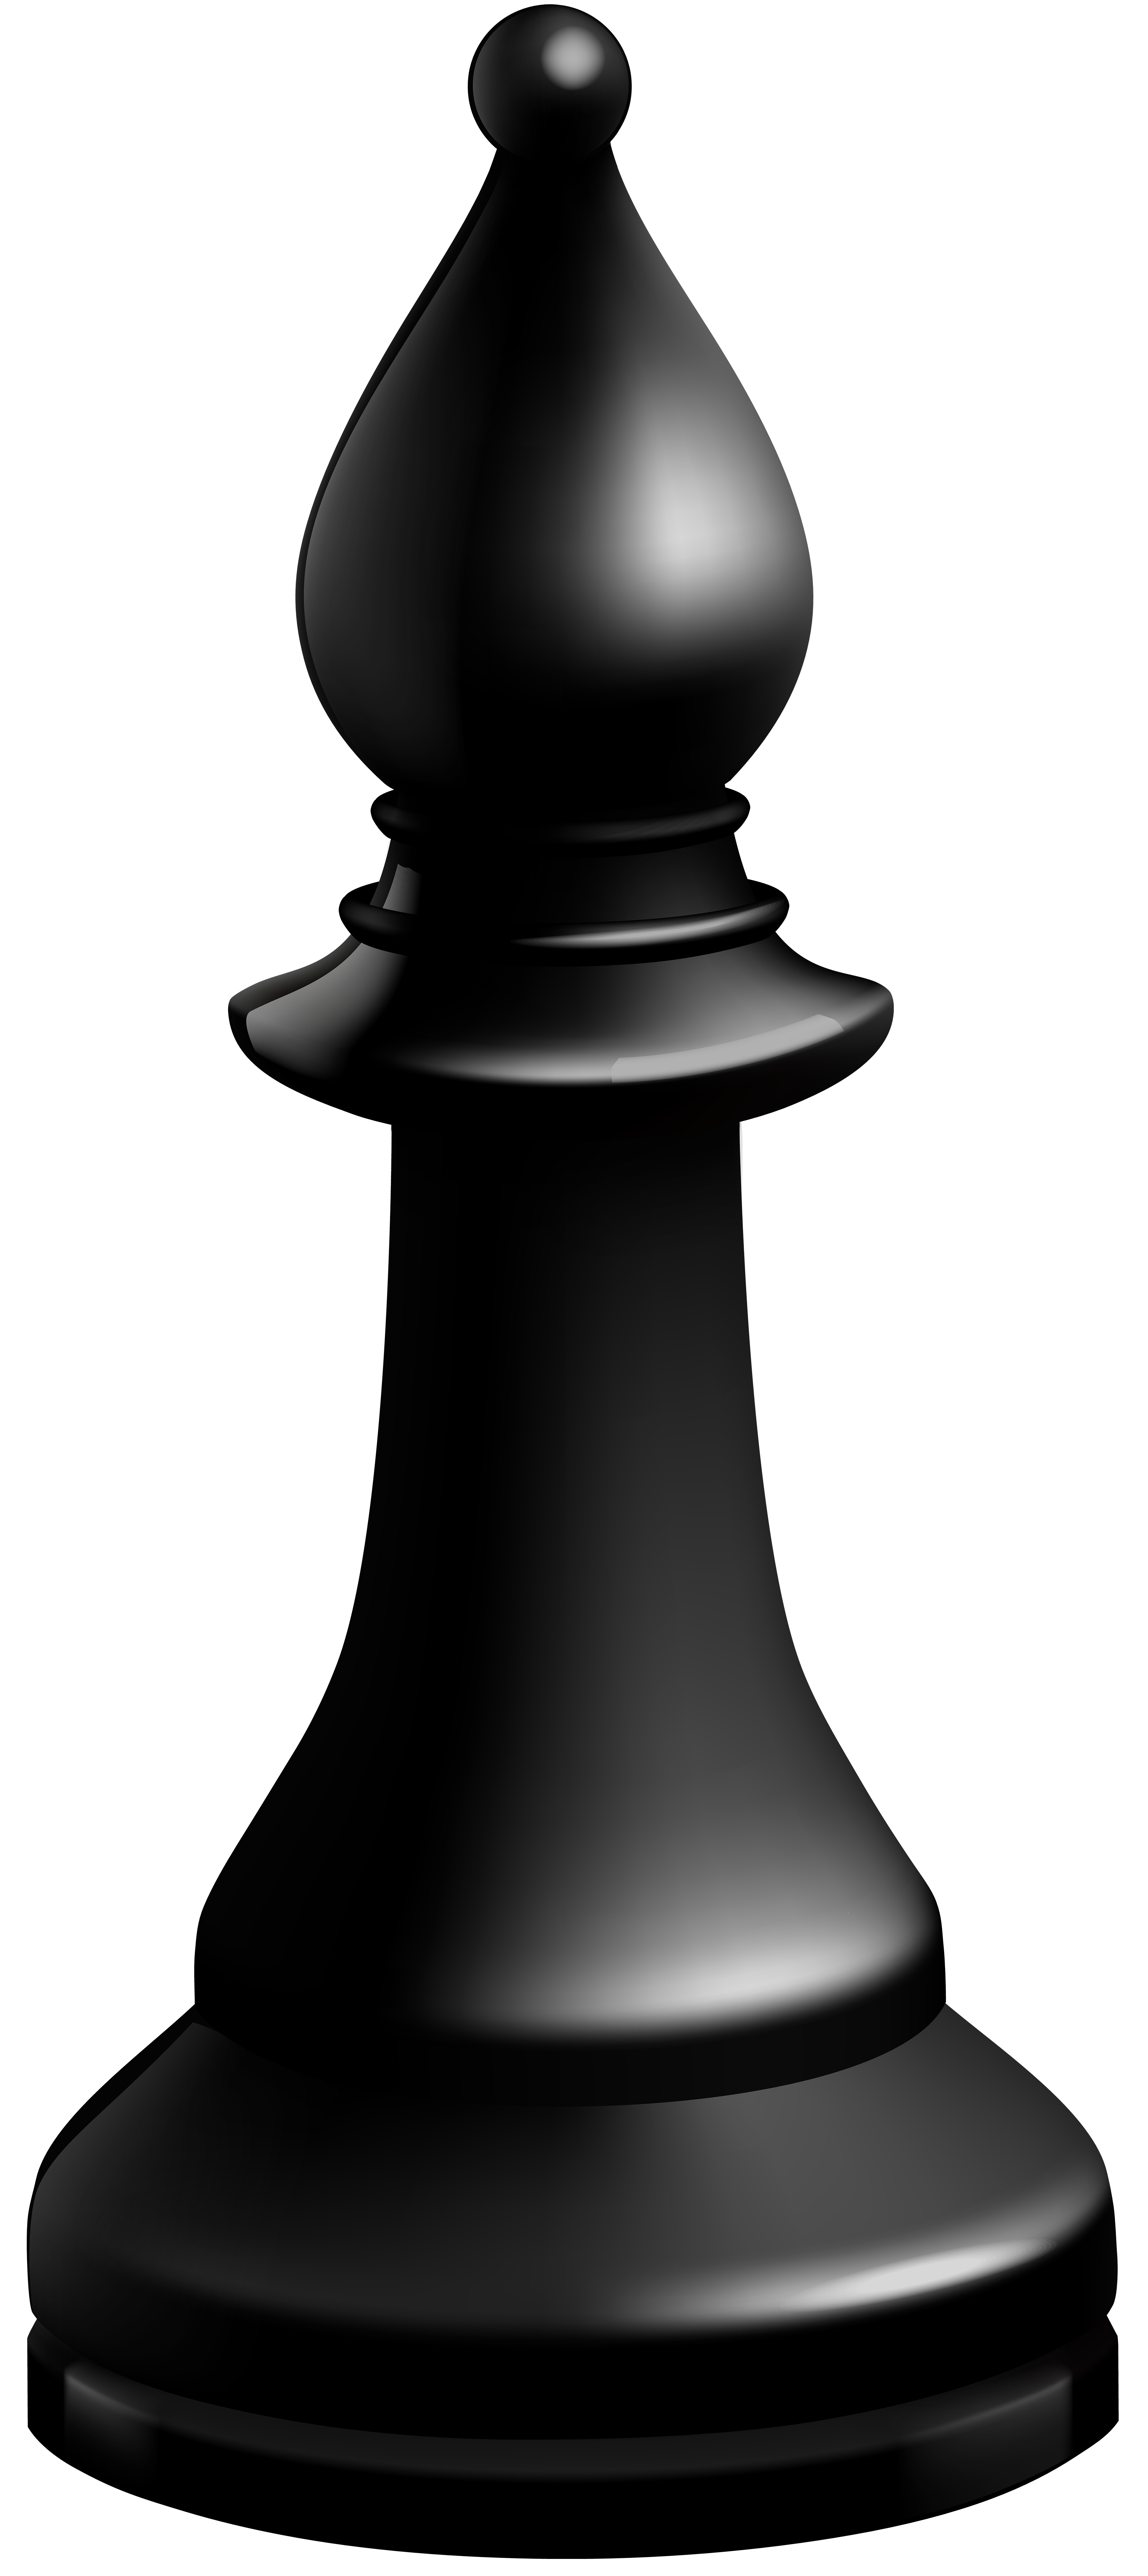 Bishop black chess.